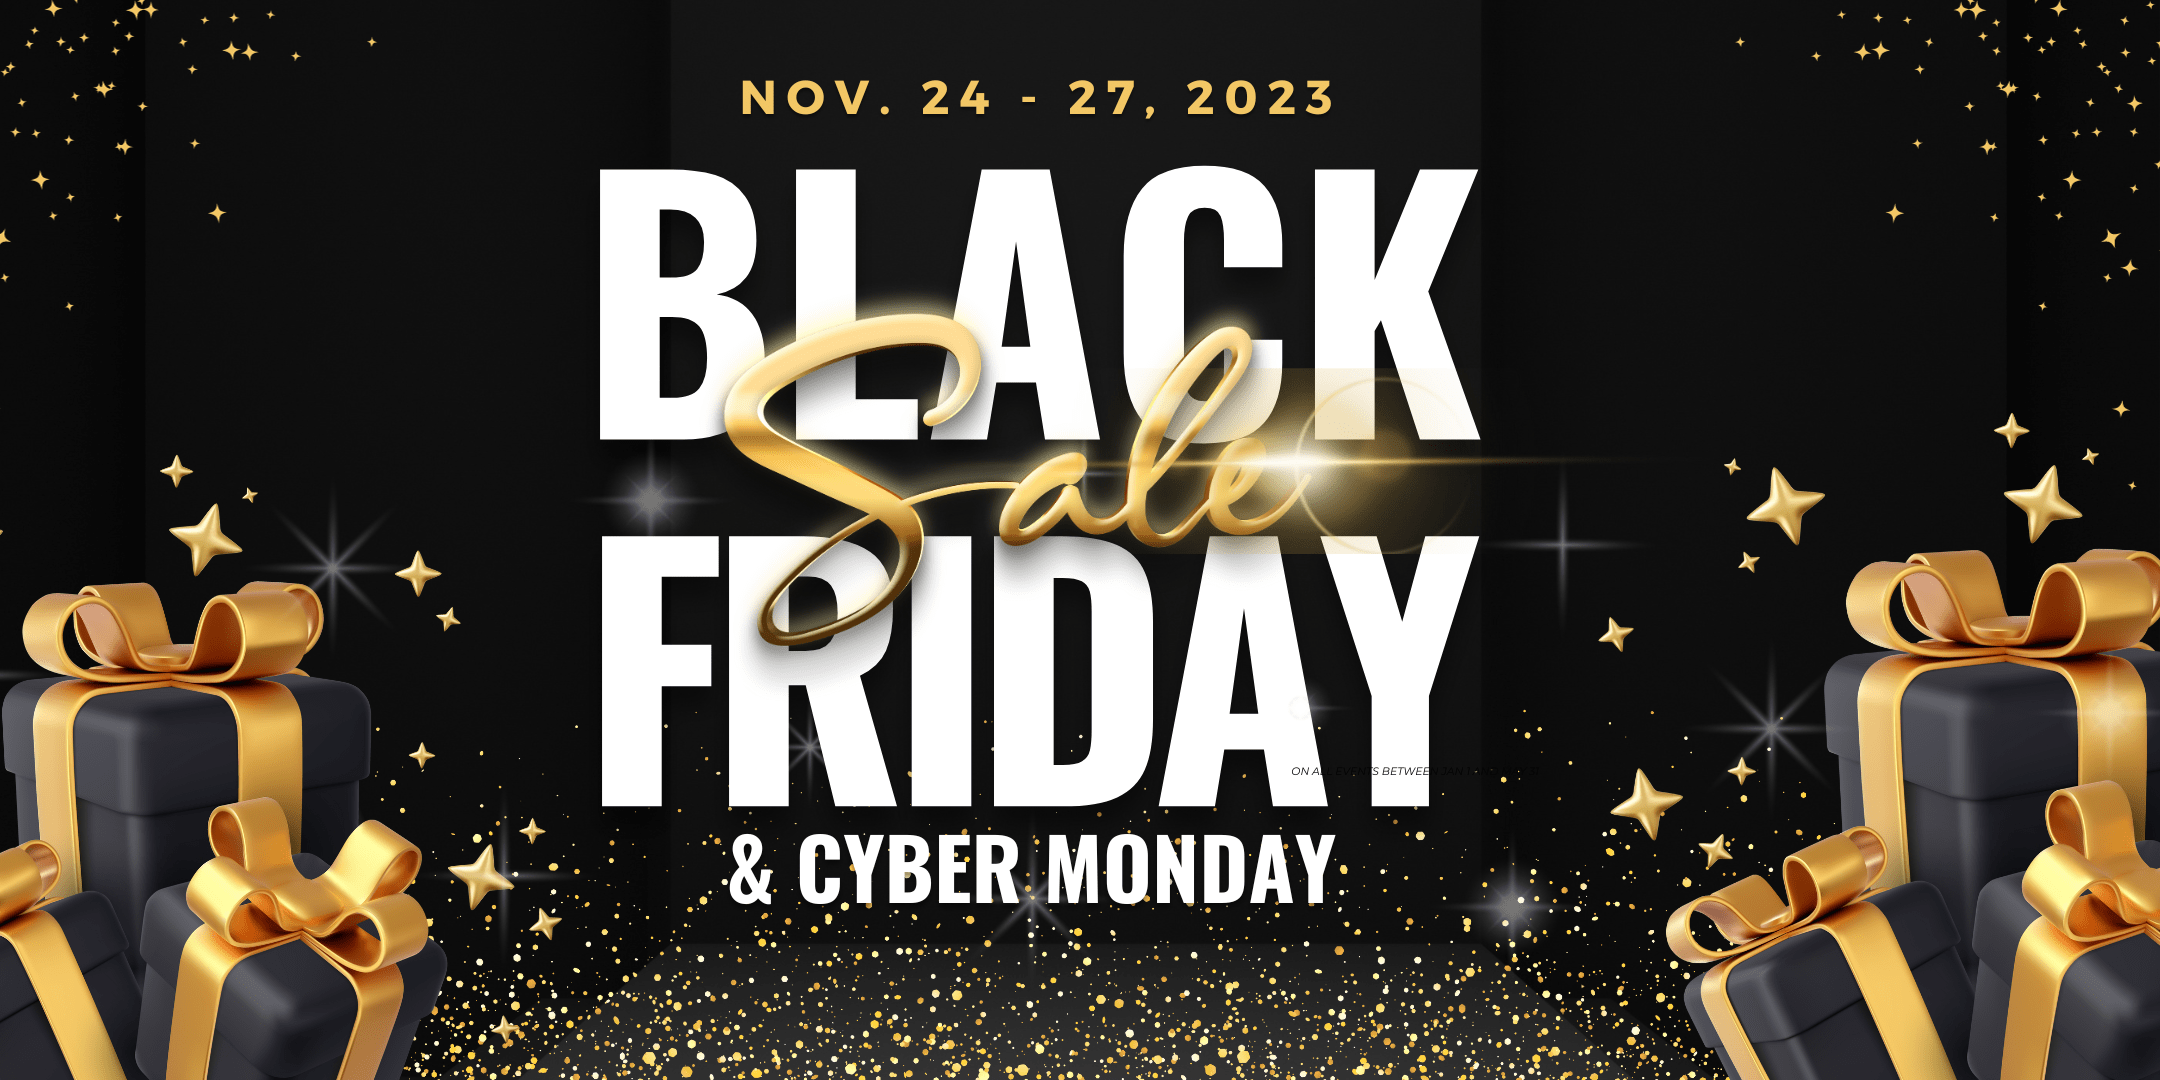 Black Friday deals – live: Cyber Monday offers still running after